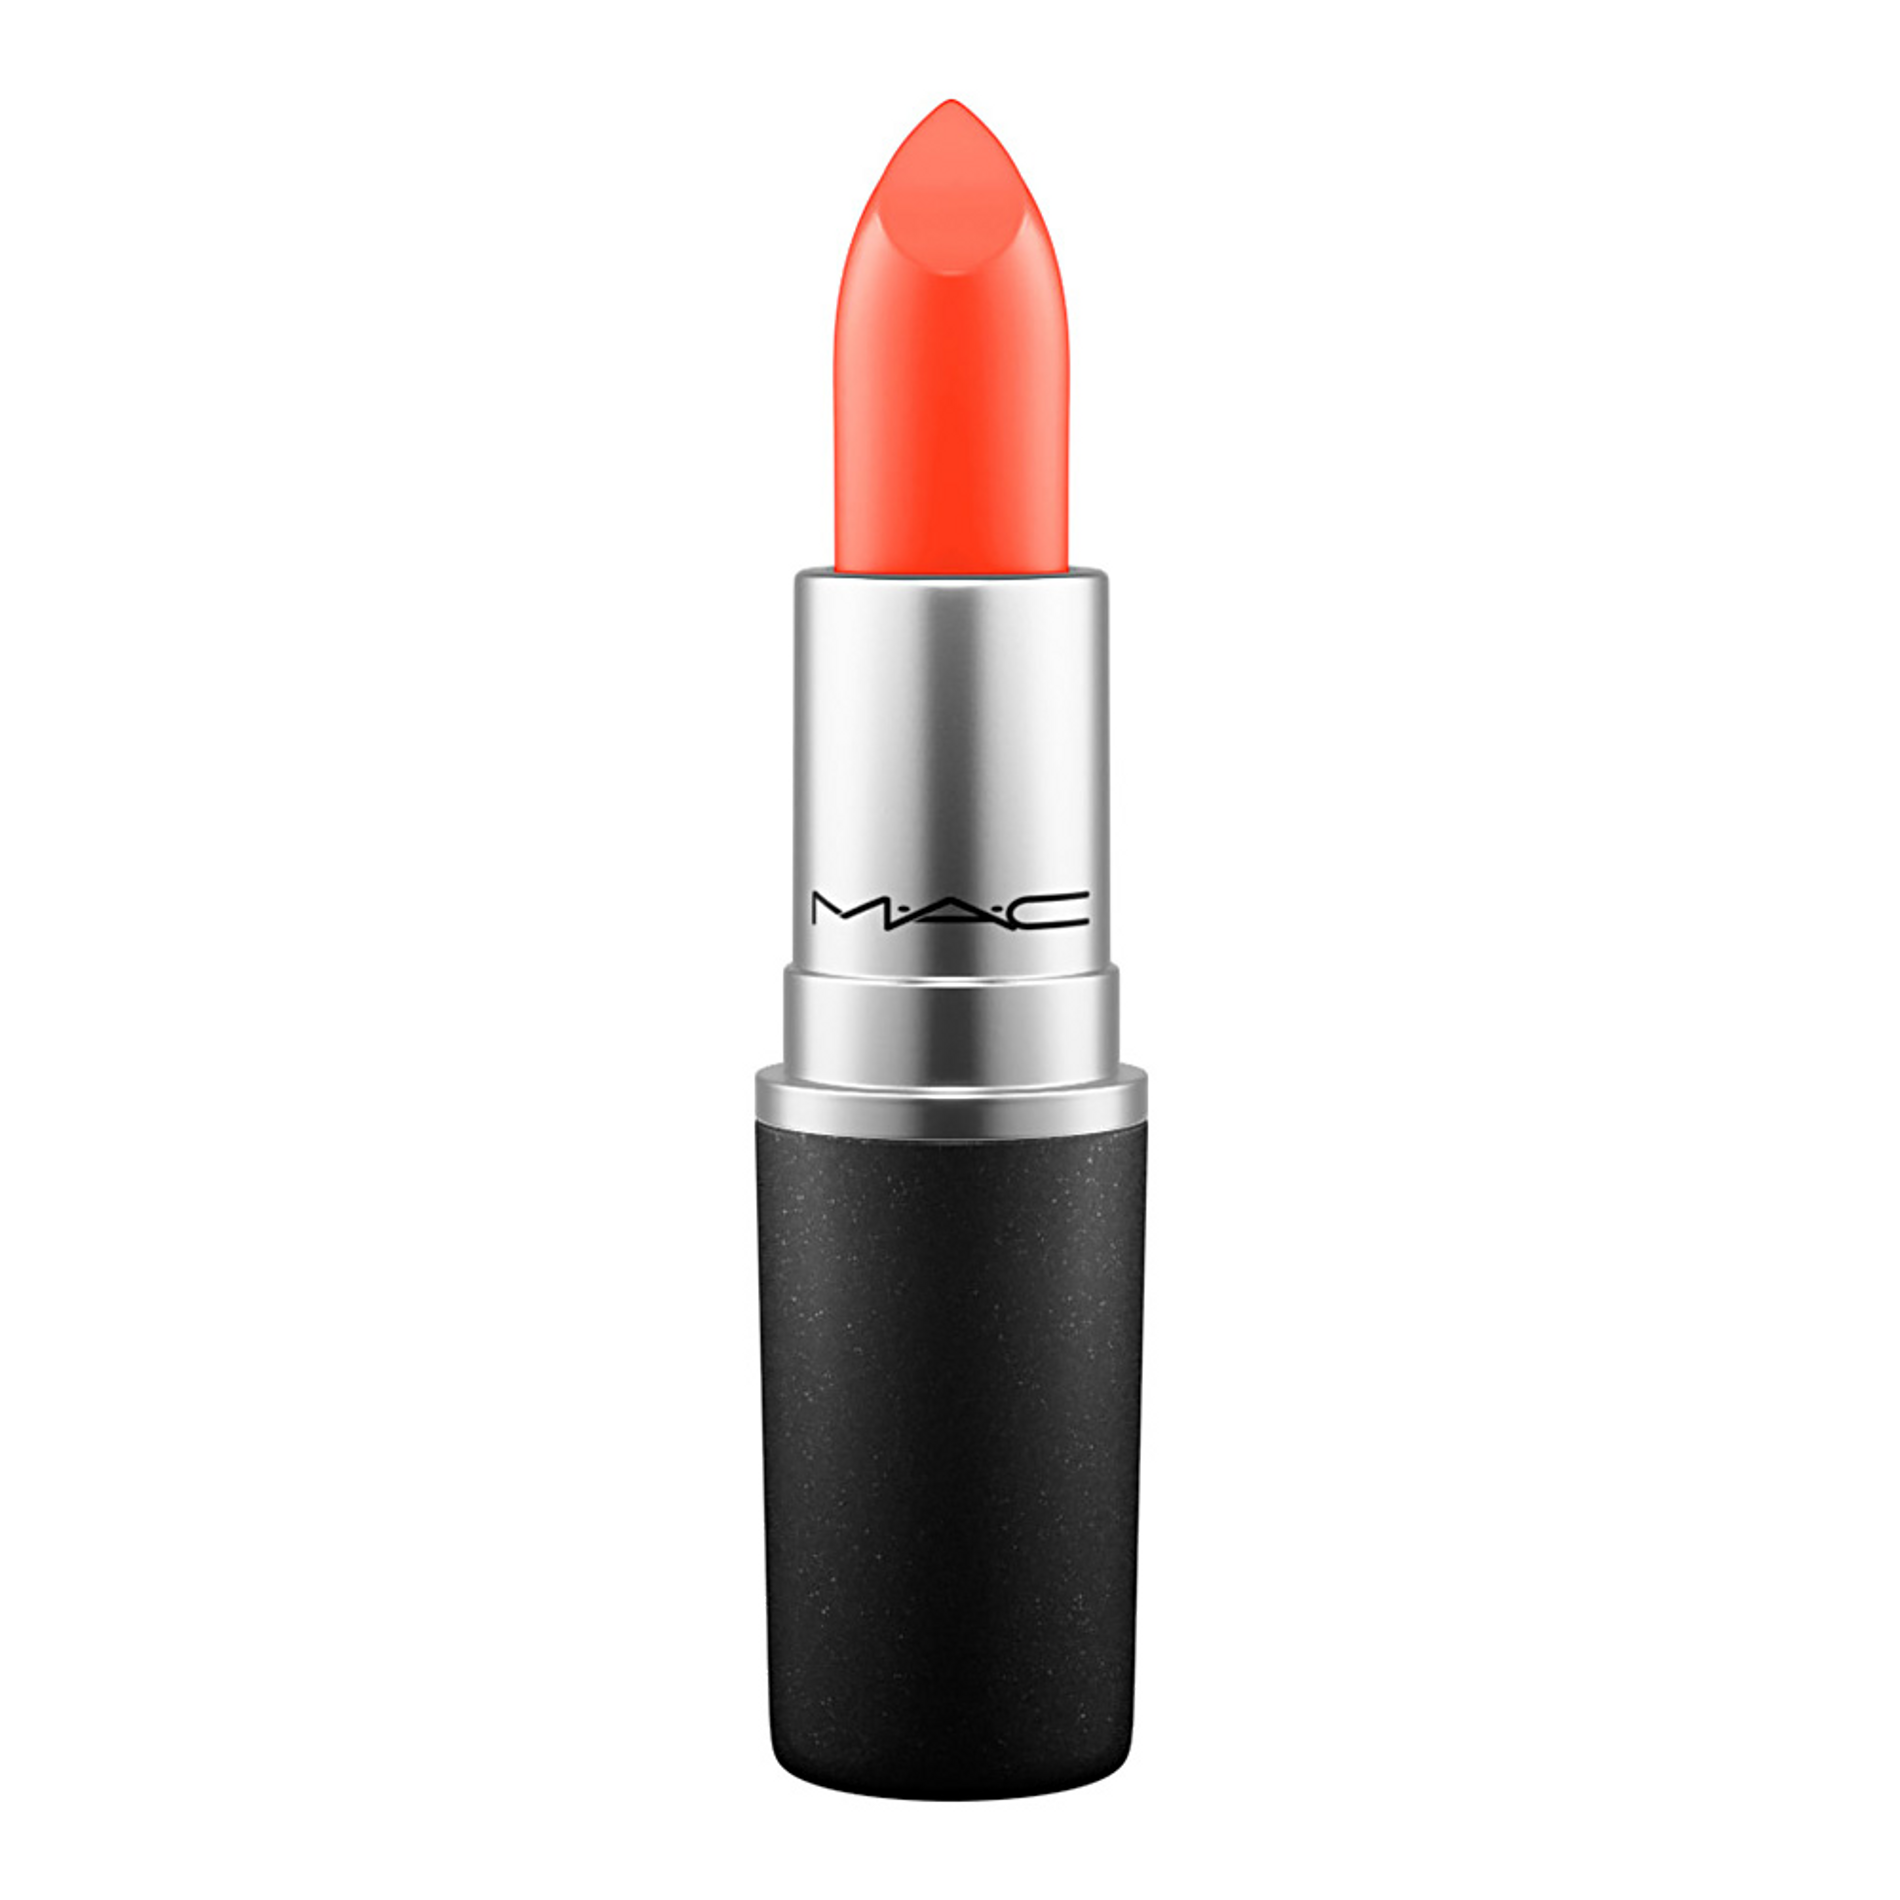 son-thoi-mac-amplified-creme-lipstick-3g-8